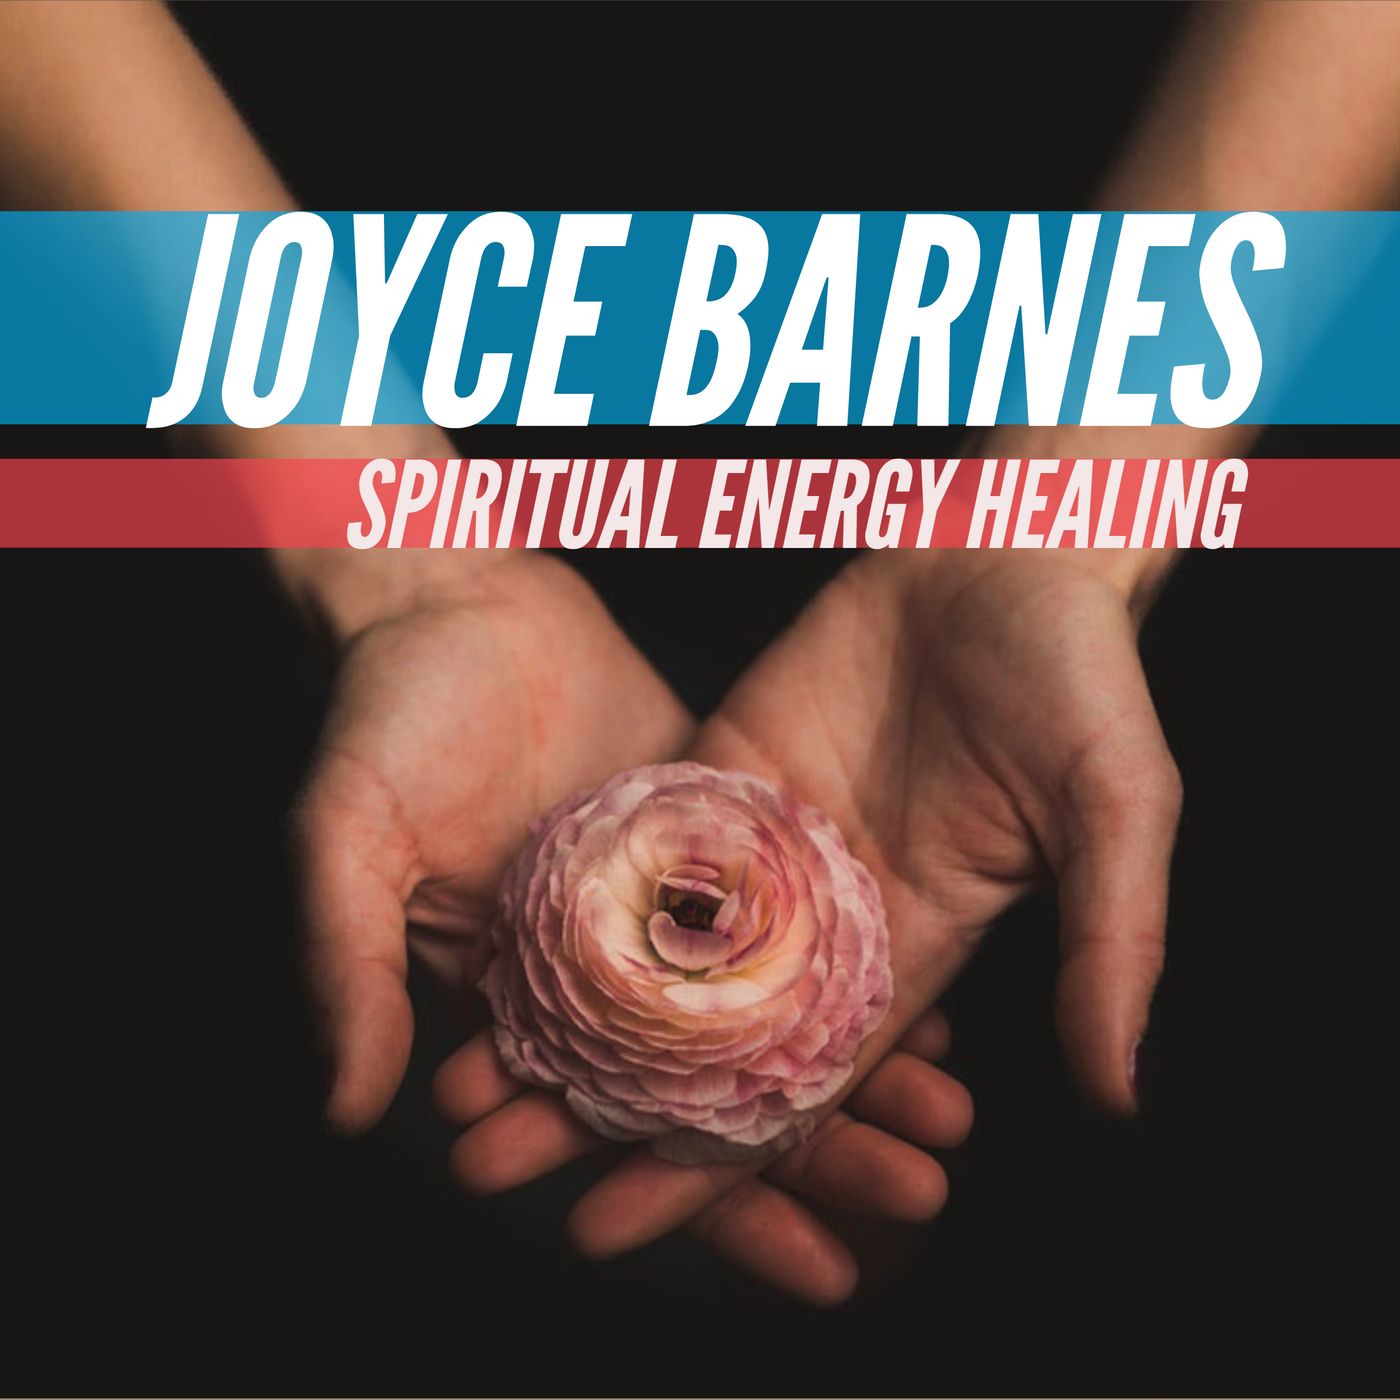 Spiritual Energy Healer and Reiki Master Joyce Barnes